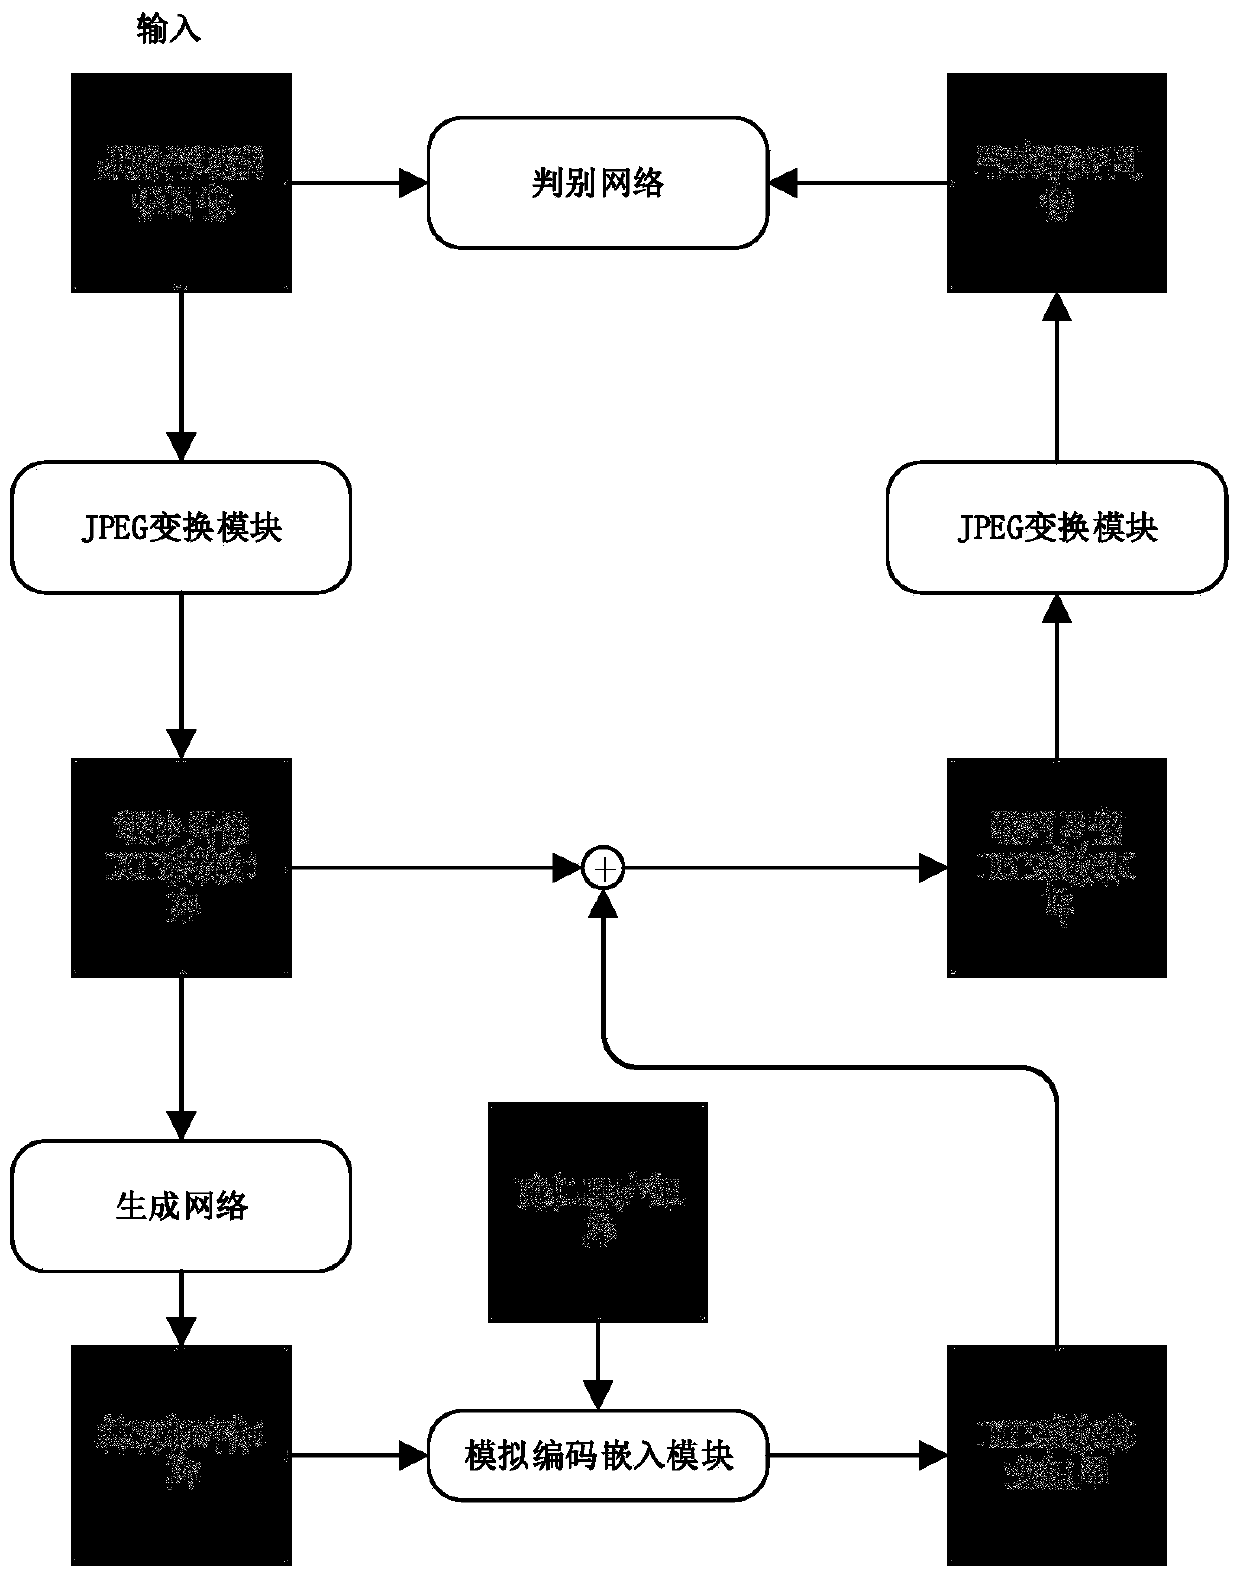 JPEG domain image steganography method and system based on generative adversarial network